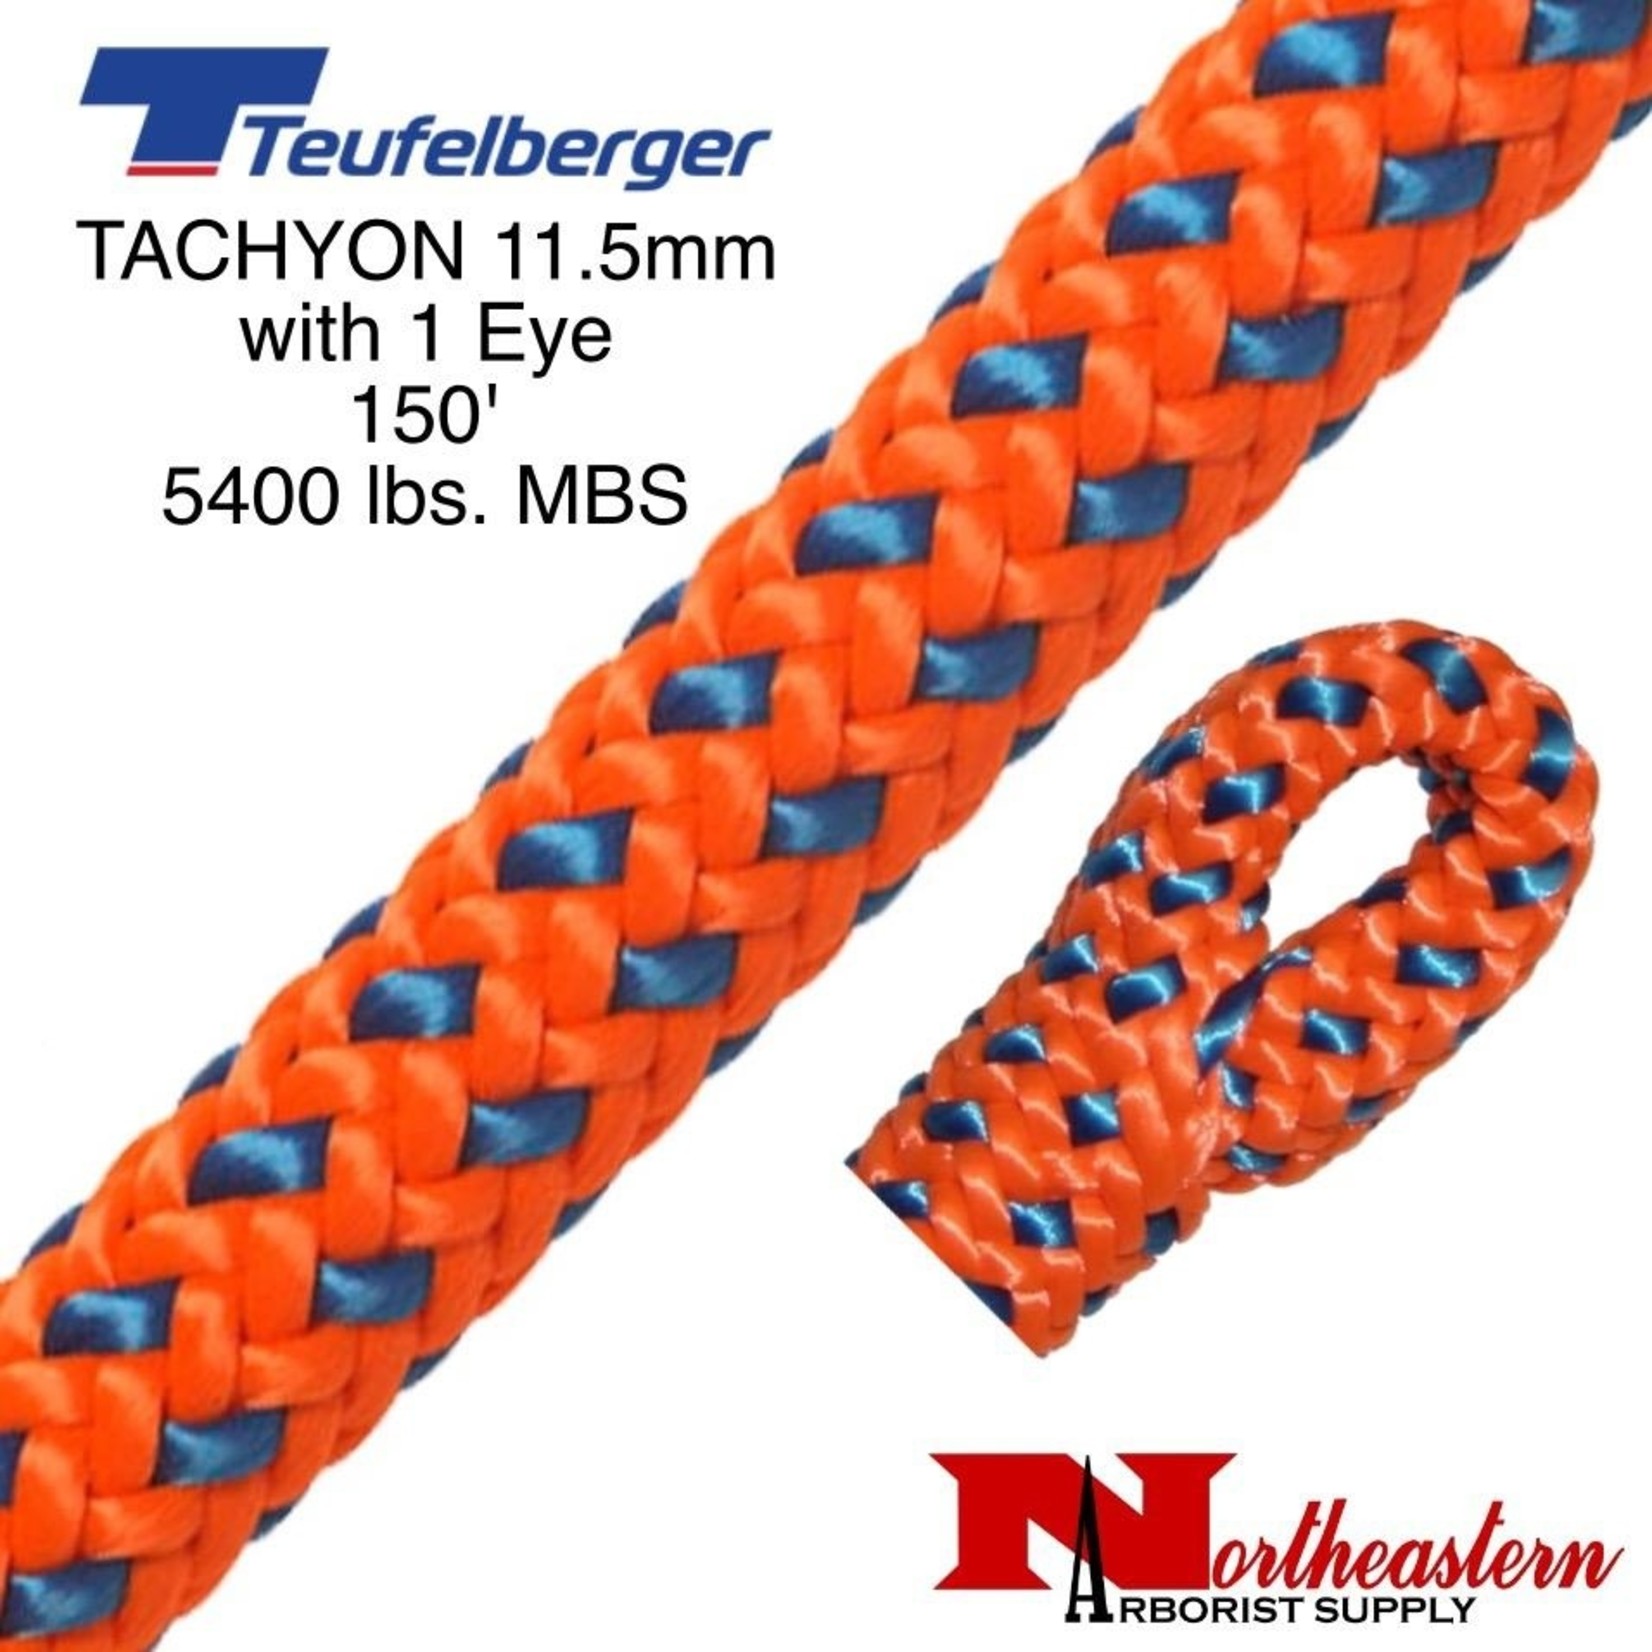 Teufelberger Tachyon 11.5mm x 150' 1" Eye One End, Orange/Blue 5400 Lbs. MBS